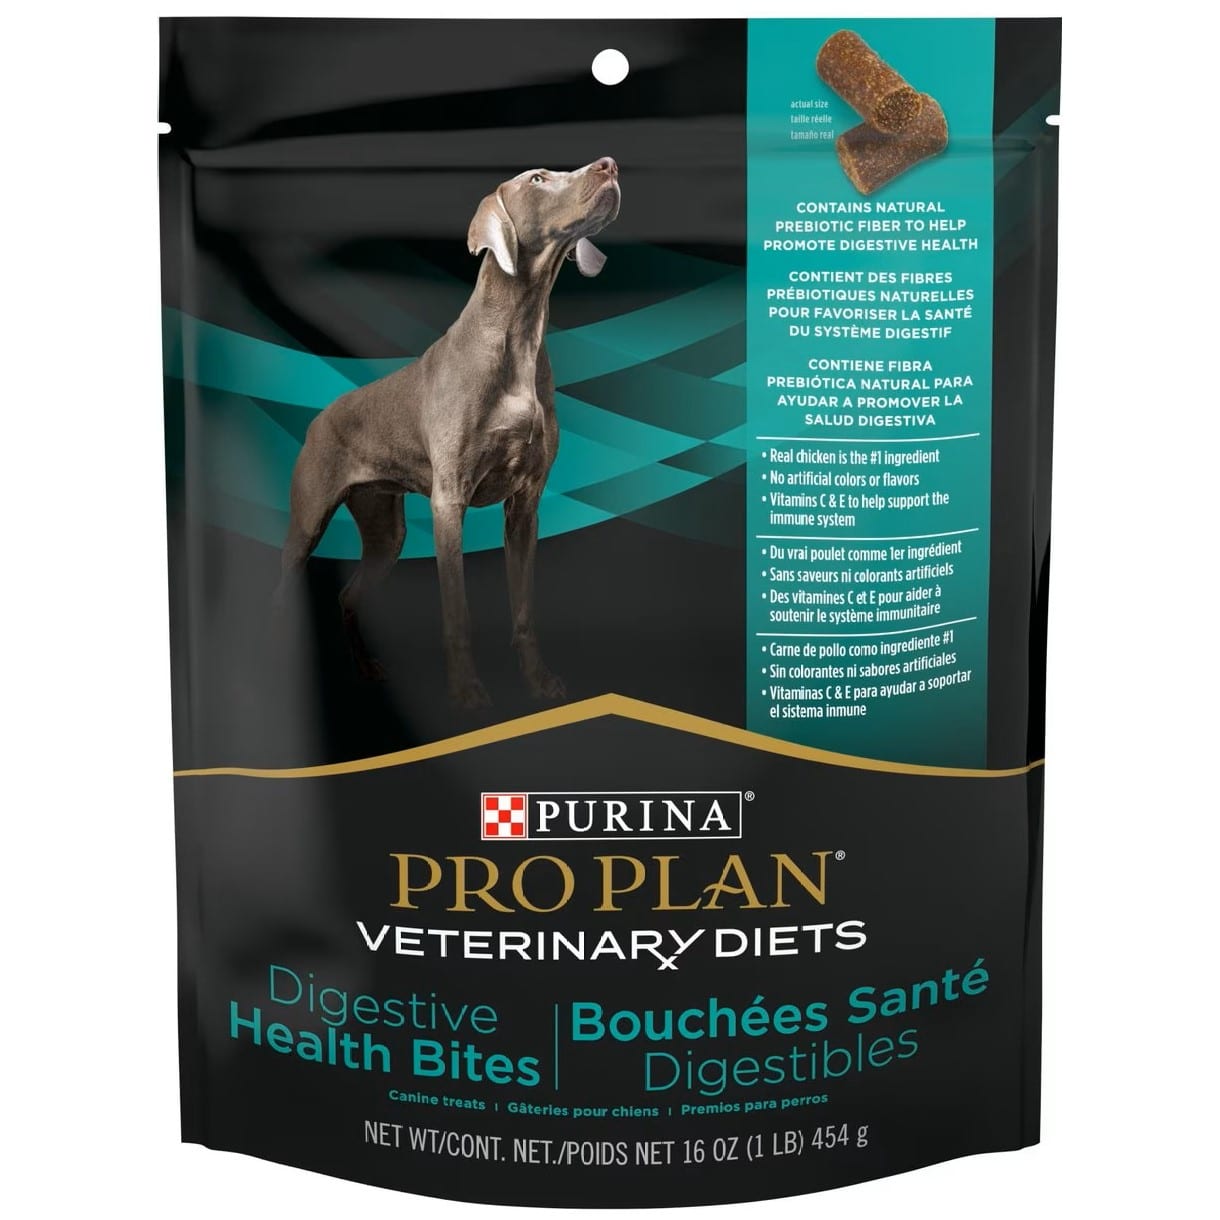 Purina Pro Plan Veterinary Diets Digestive Health Bites Soft & Chewy Dog Treats, 16oz bag